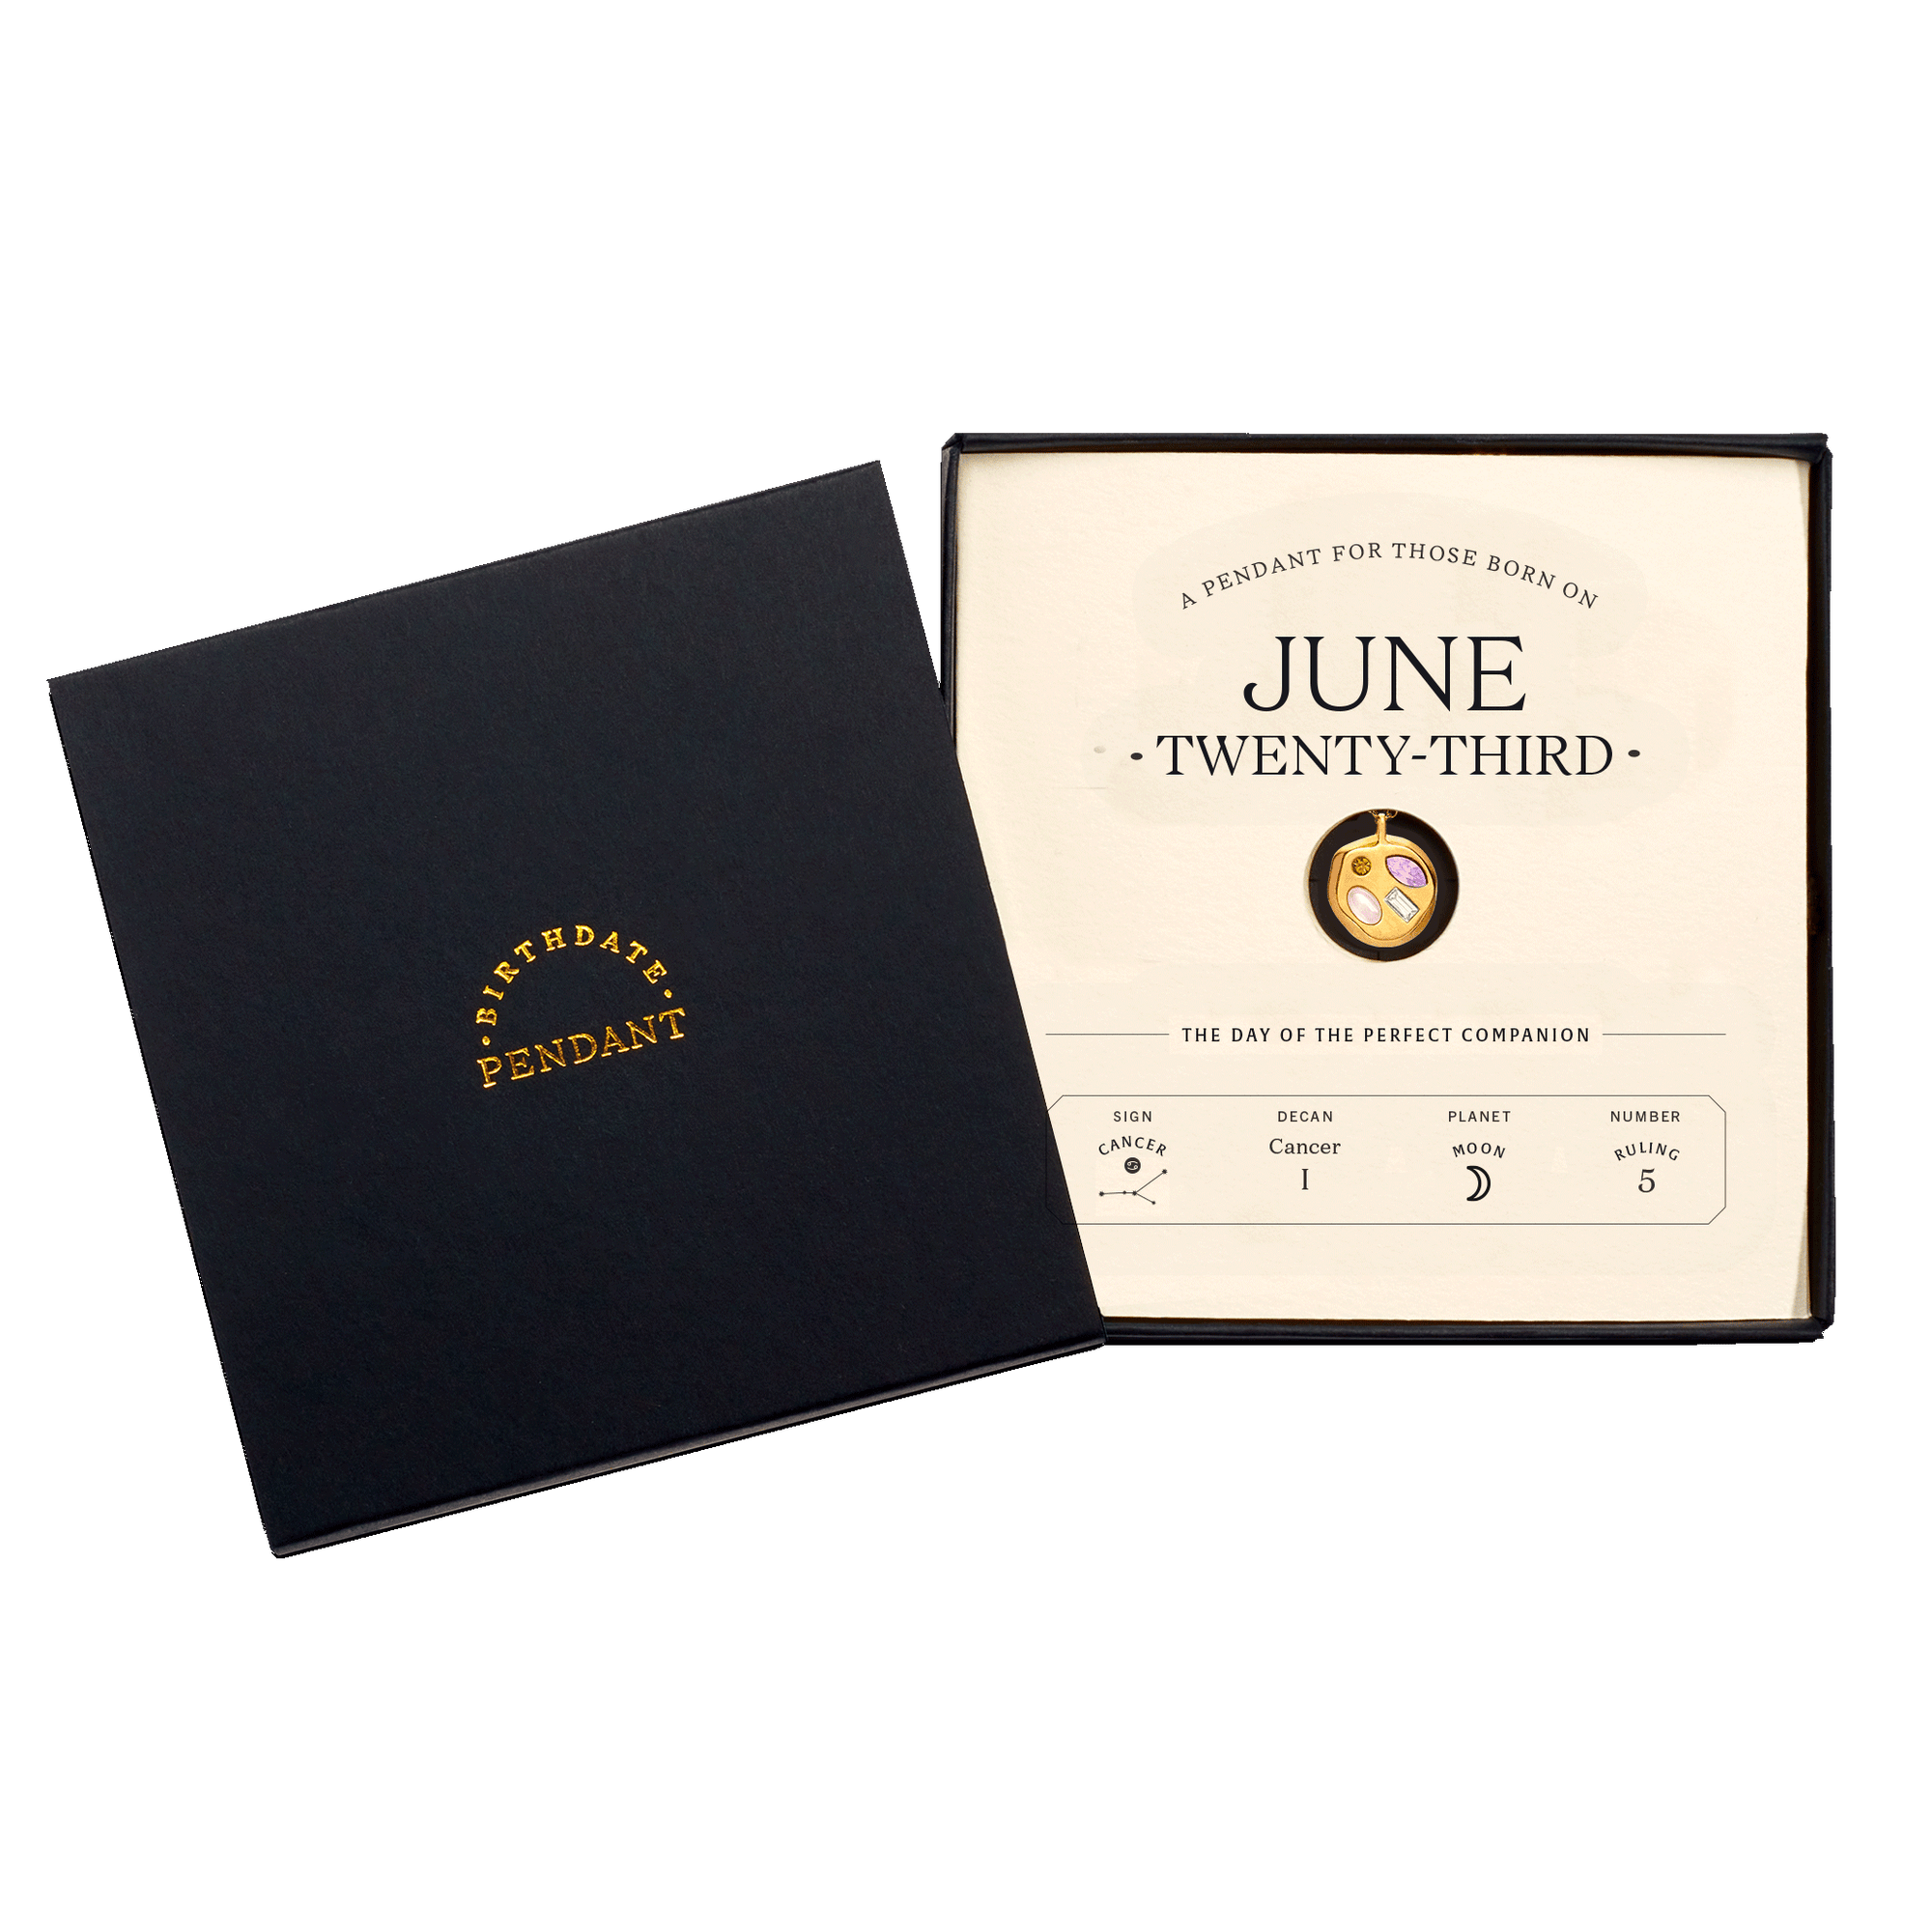 The June Twenty-Third Pendant inside its box